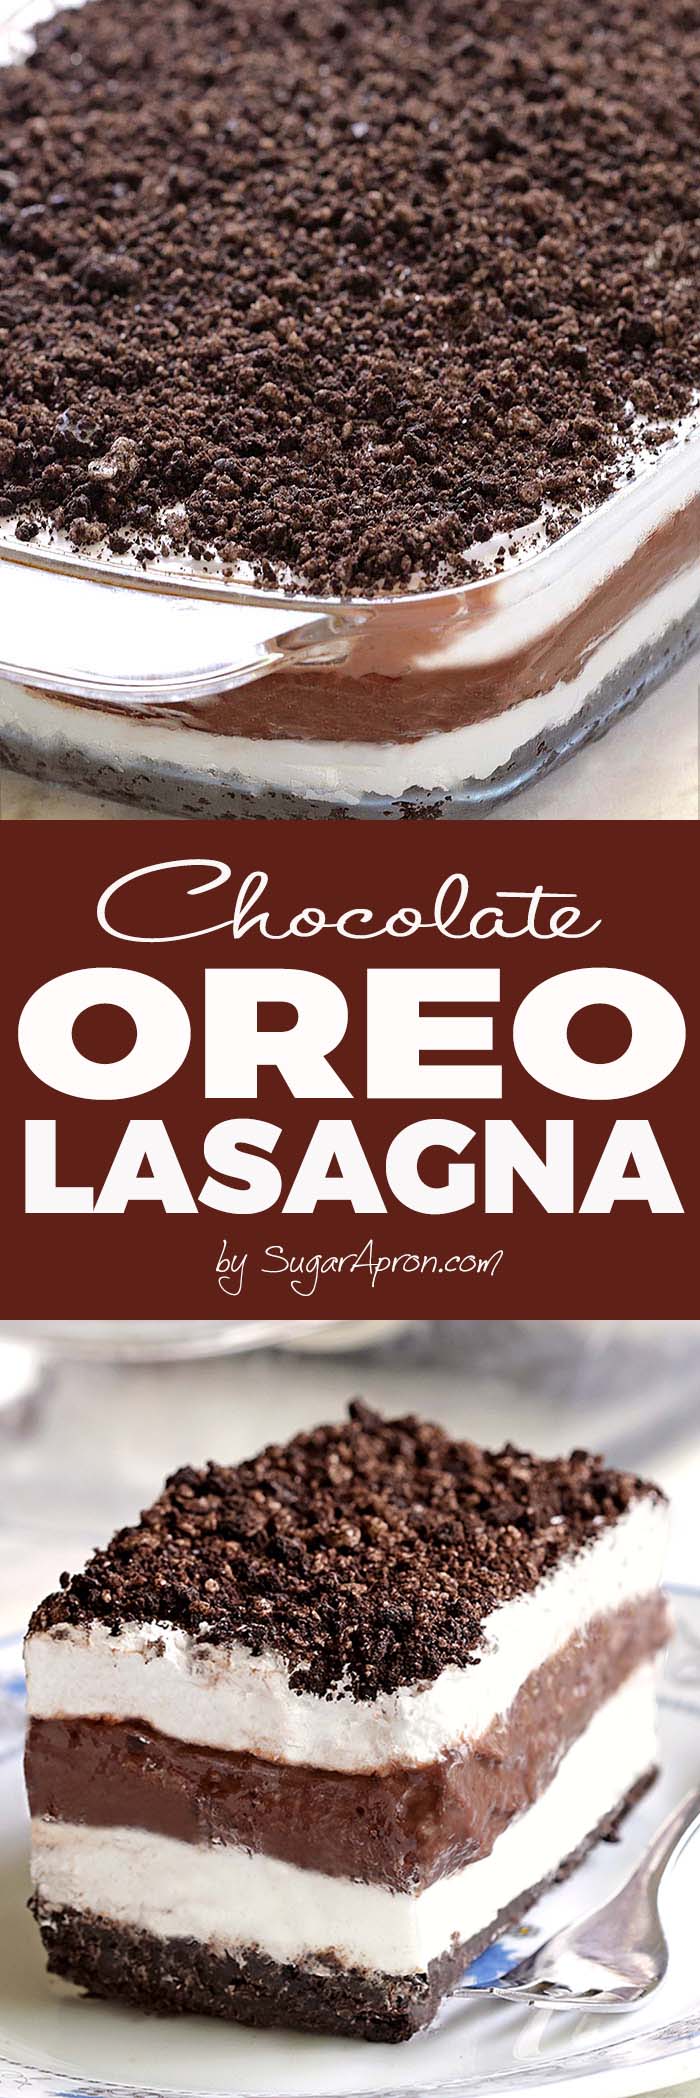 No Bake Chocolate Oreo Lasagna will make all Your Chocolate and Oreo dreams come true.